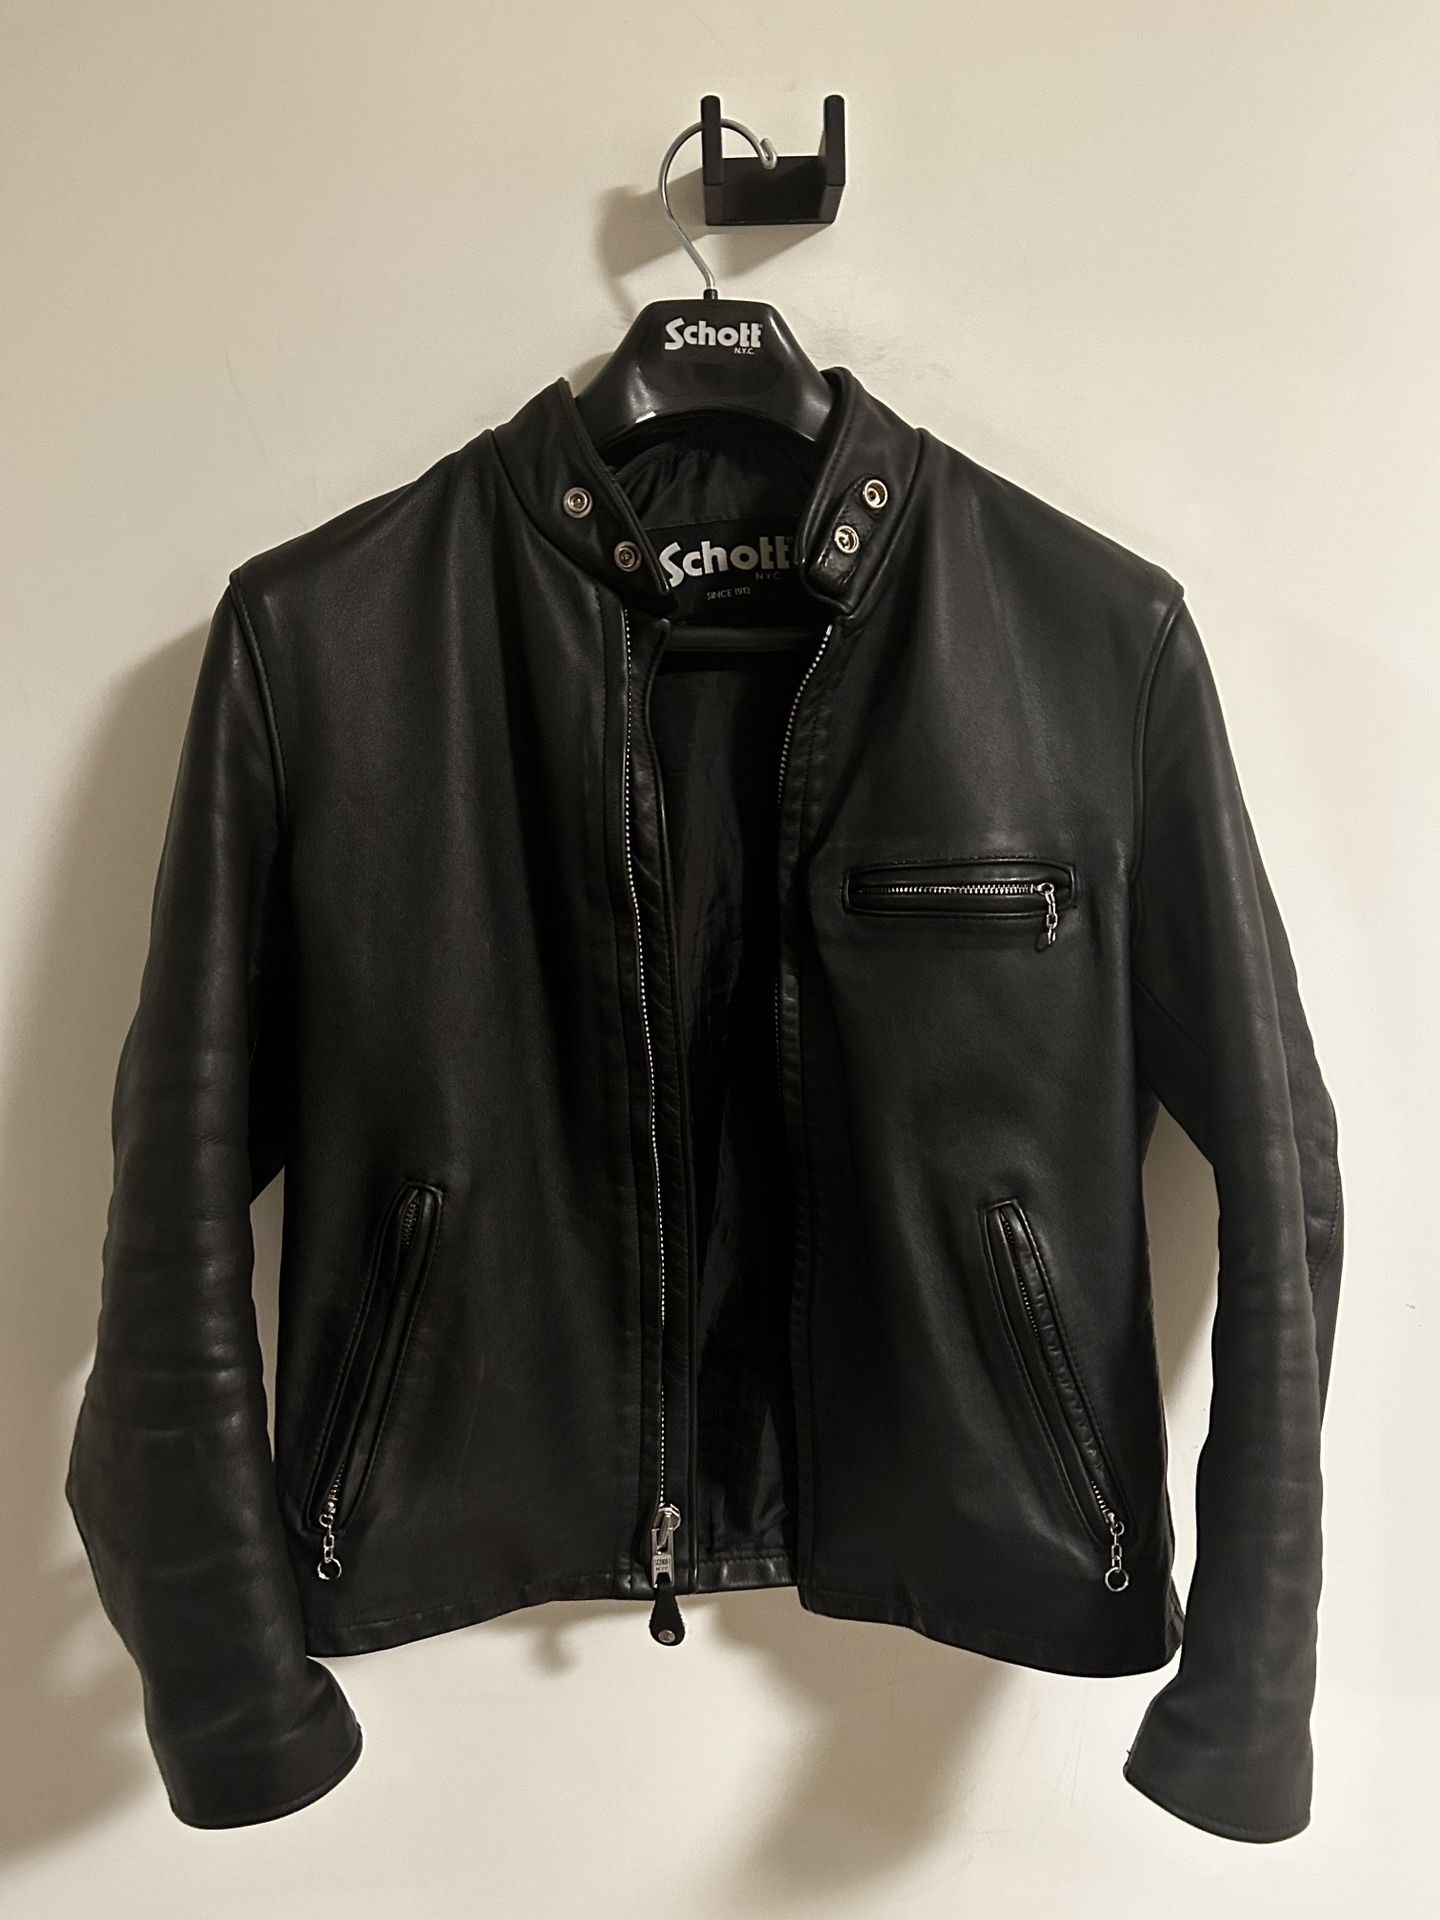 Schott Cafe Racer leather jacket